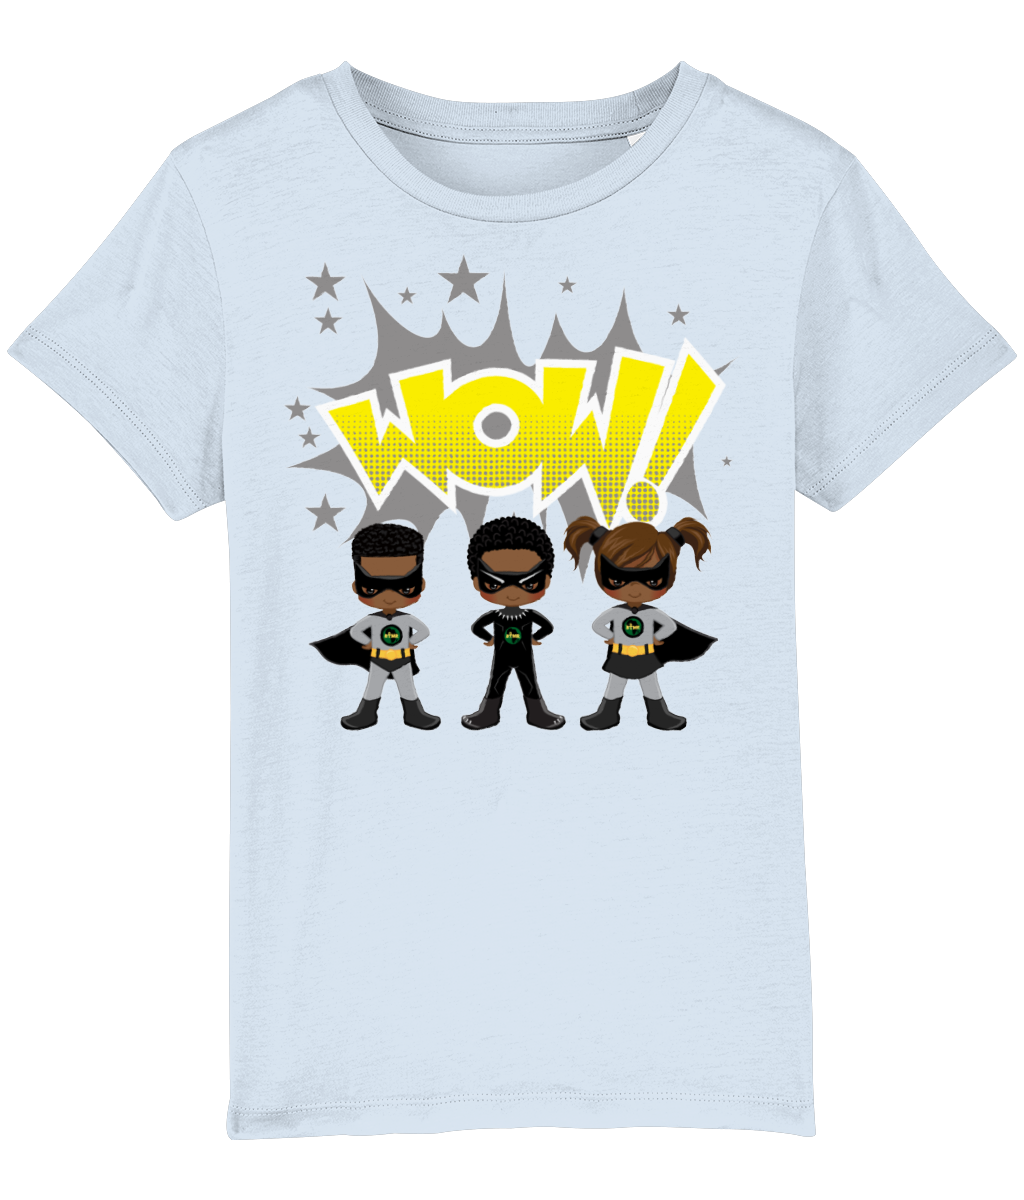 Wow! Black Superhero Squad Kids Organic Cotton T Shirt